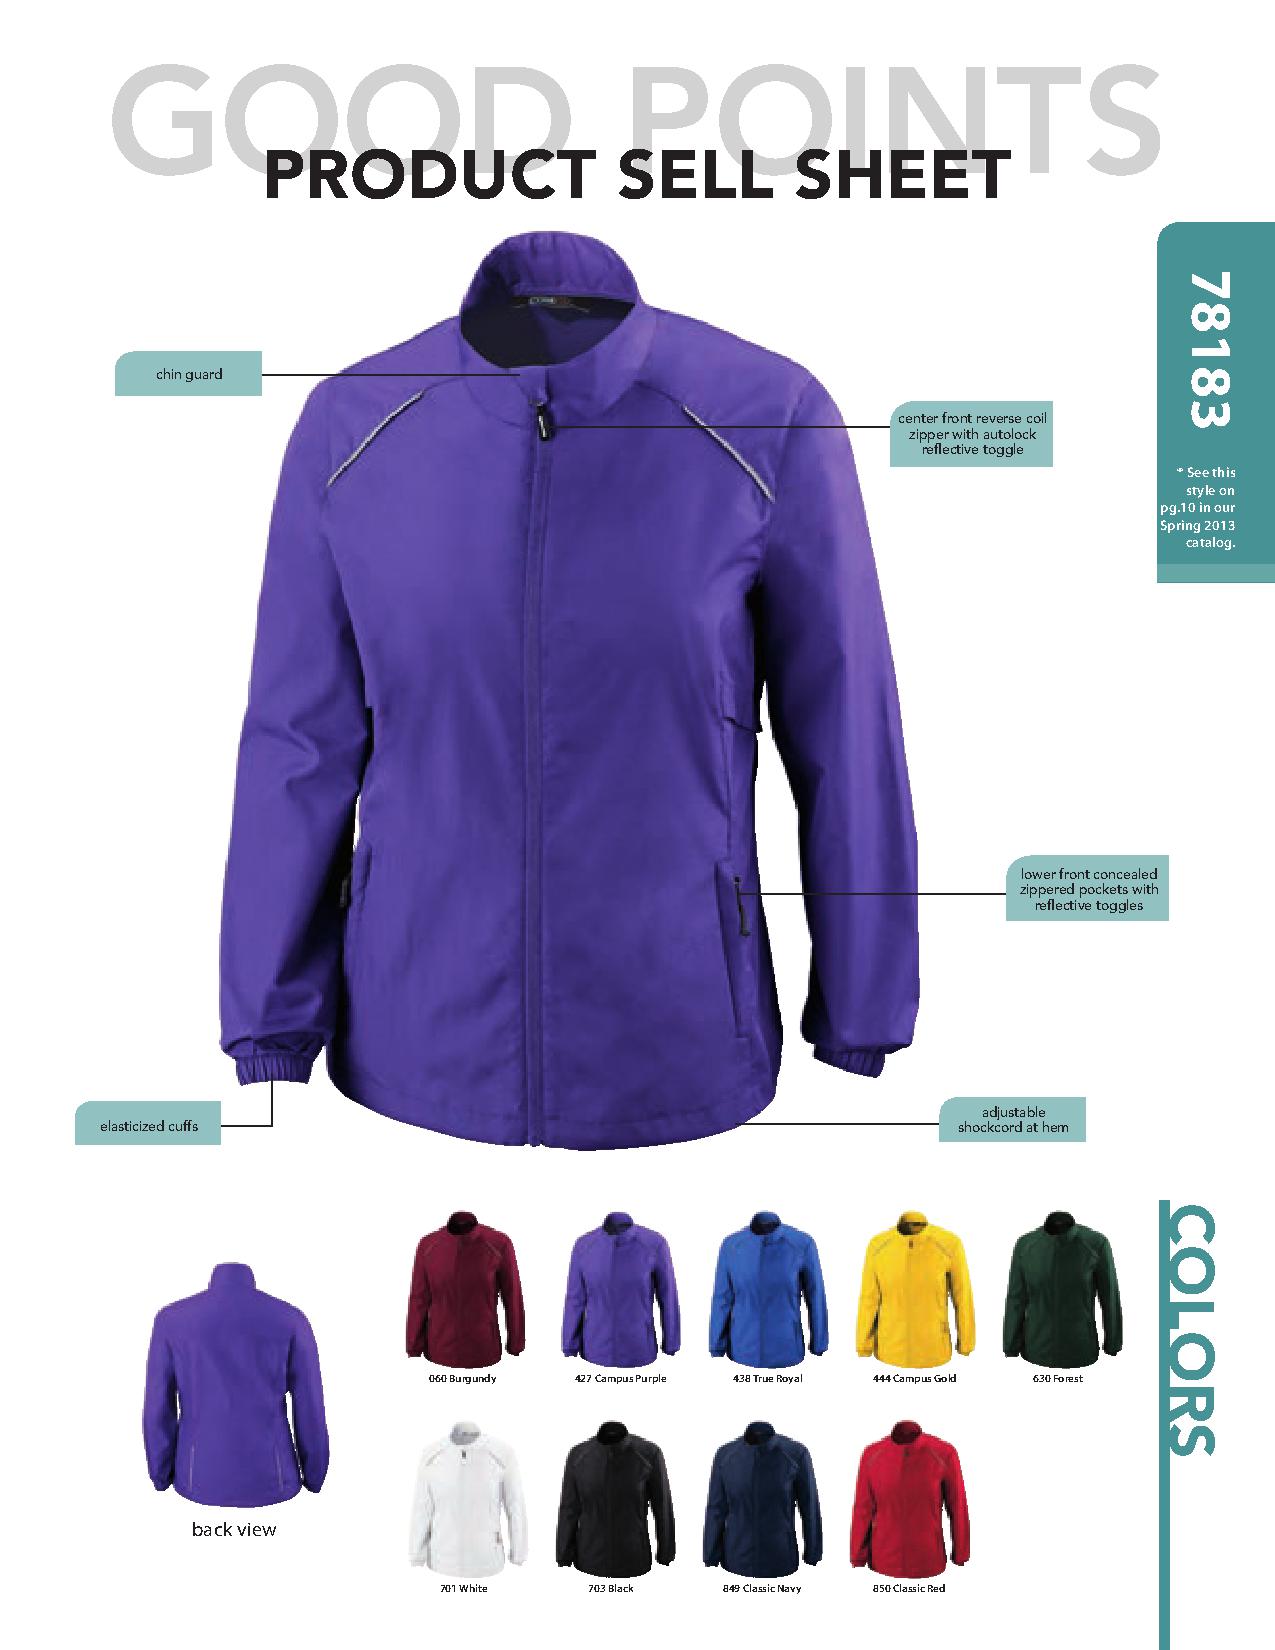 Core 365 78183 - Ladies' Motivate Unlined Lightweight Jacket